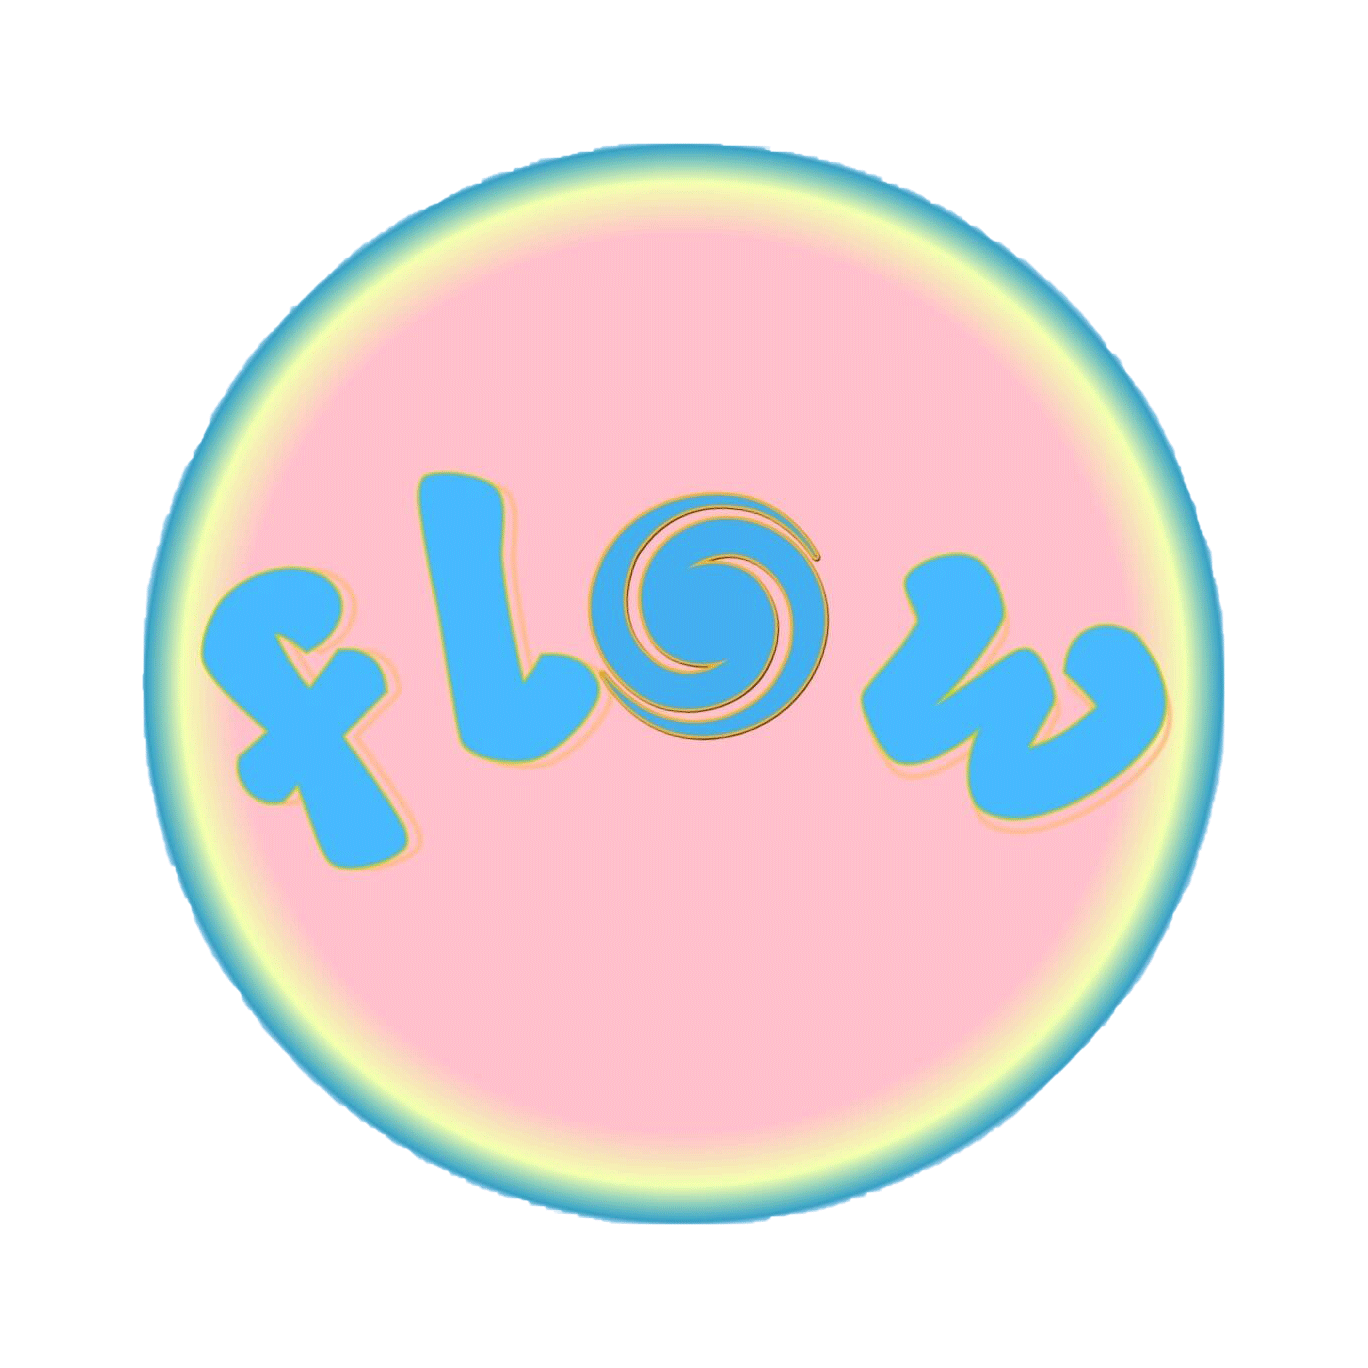 株式会社FLOW